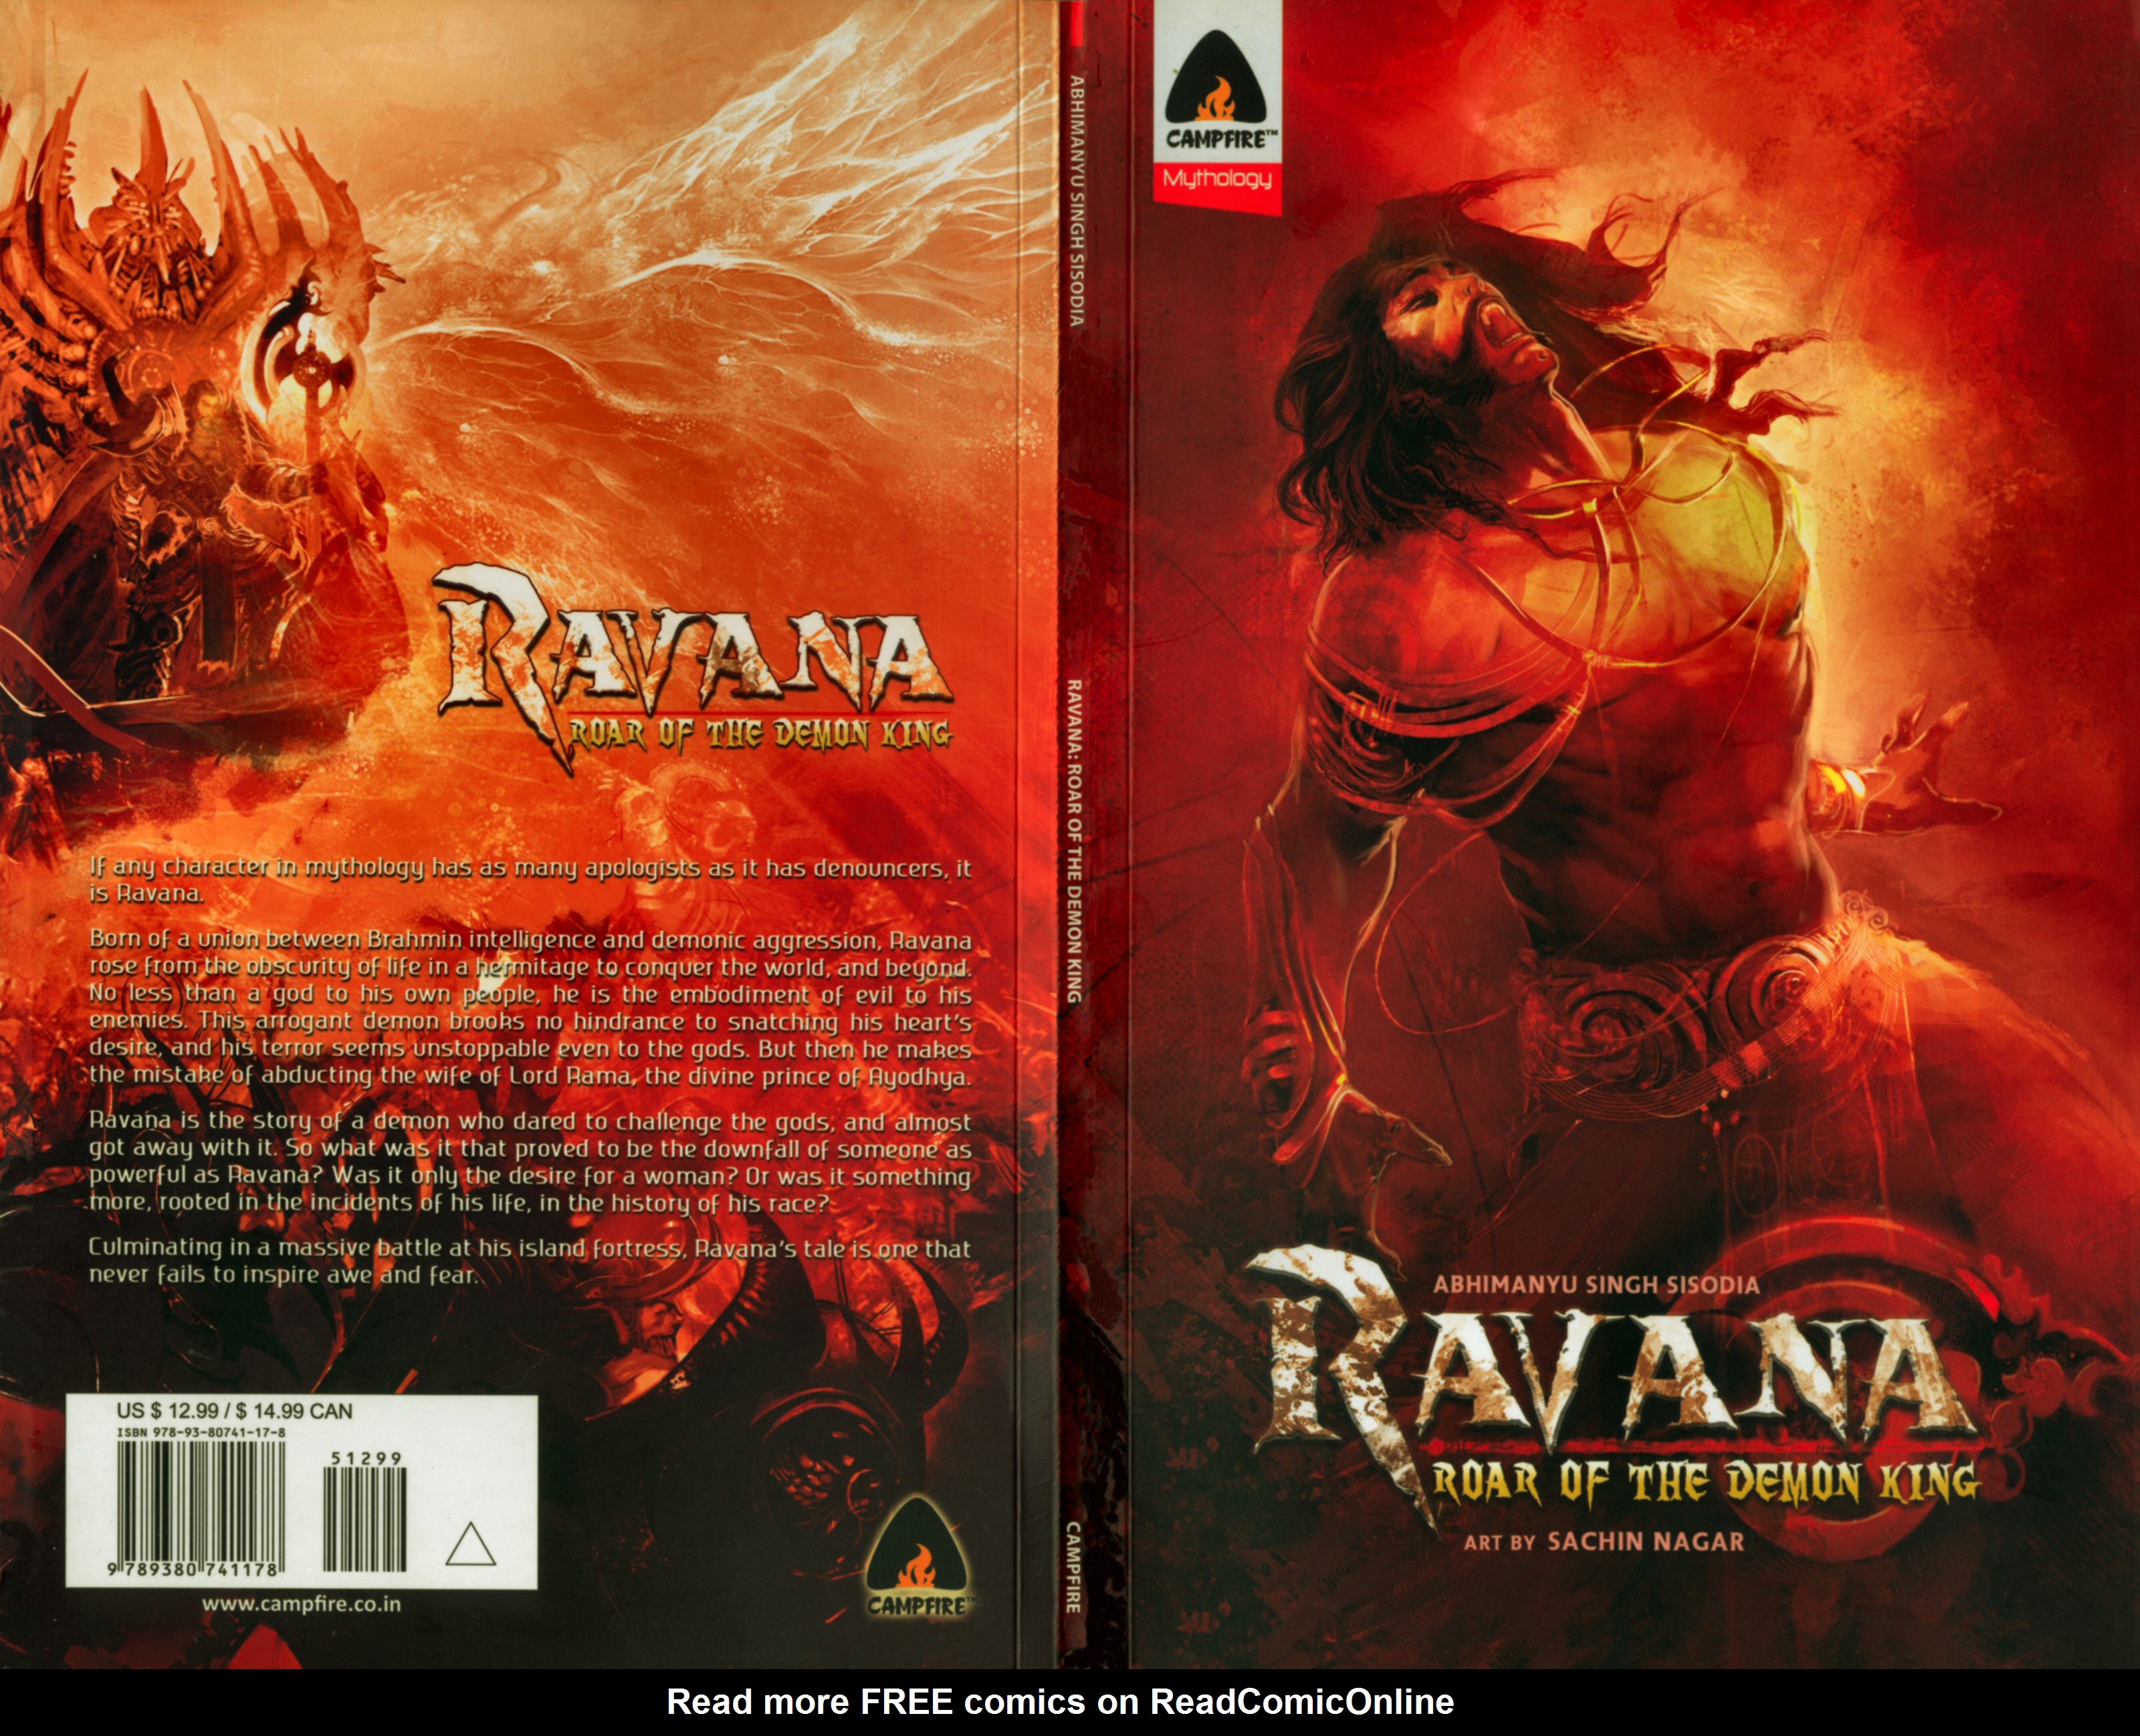 Read online Ravana: Roar of the Demon King comic -  Issue # Full - 1